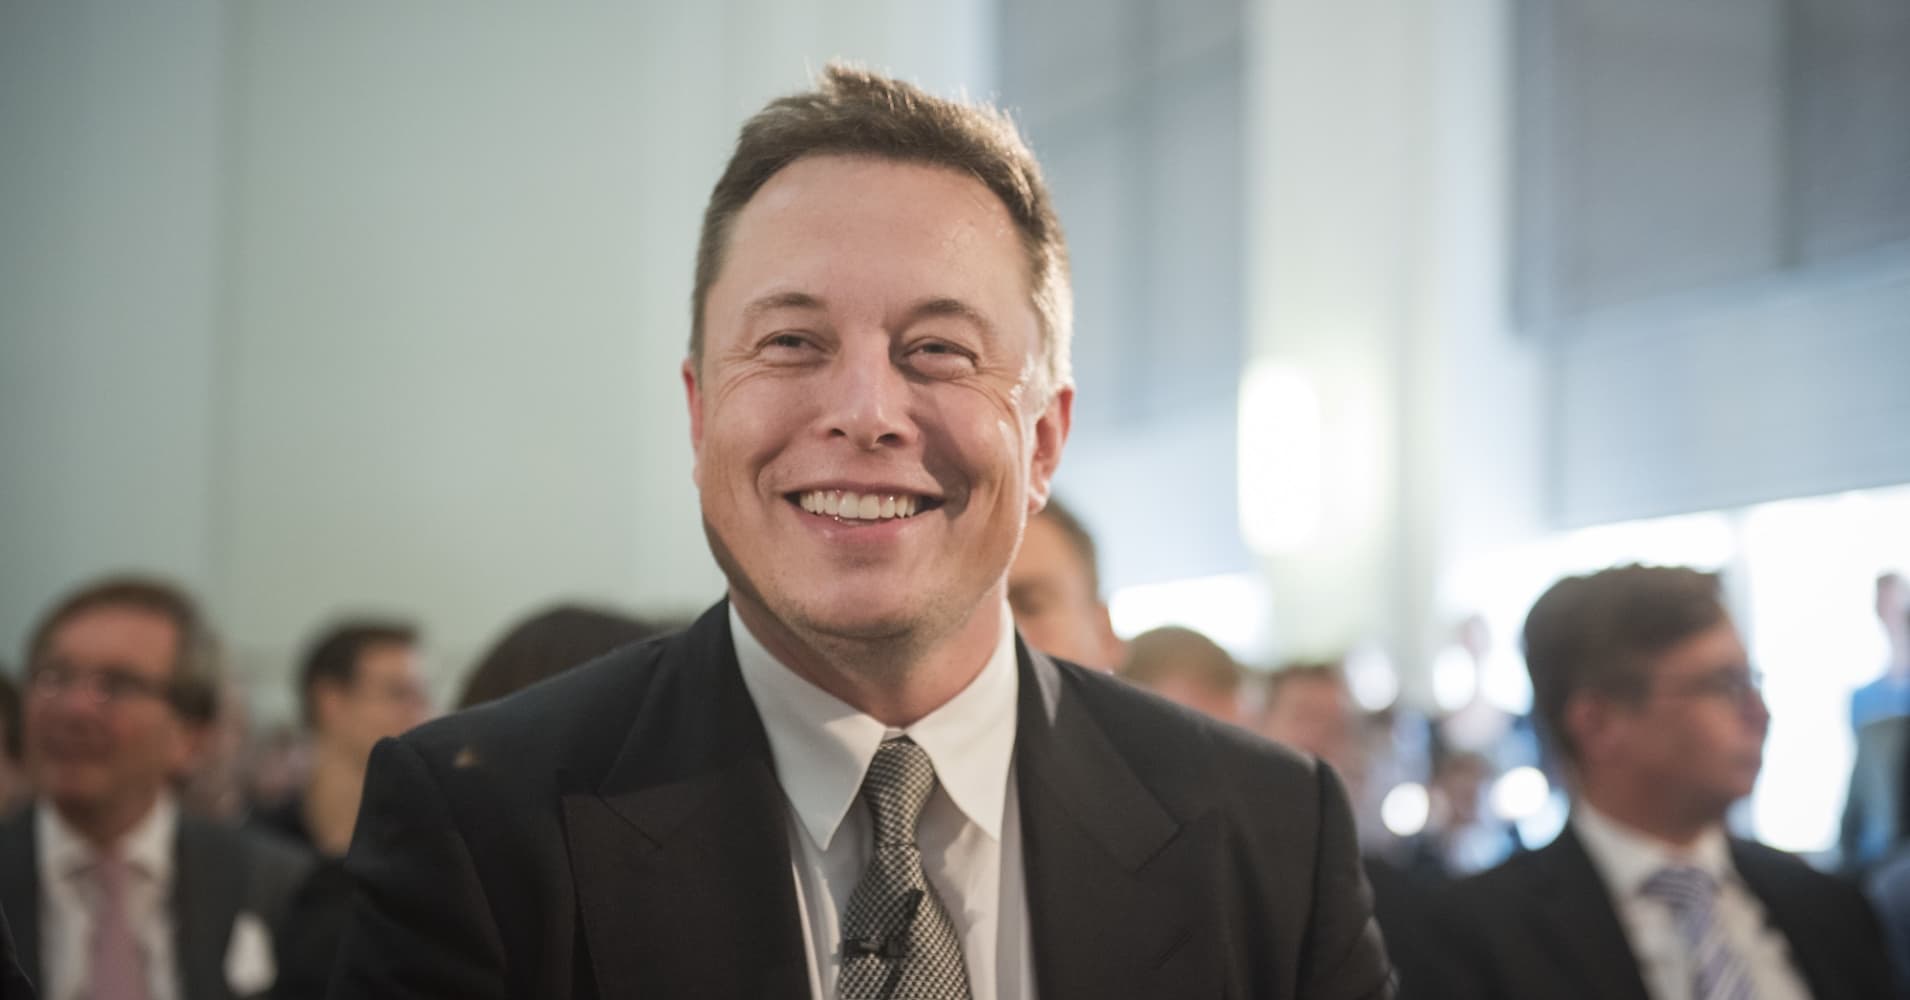 Tesla's CEO Elon Musk